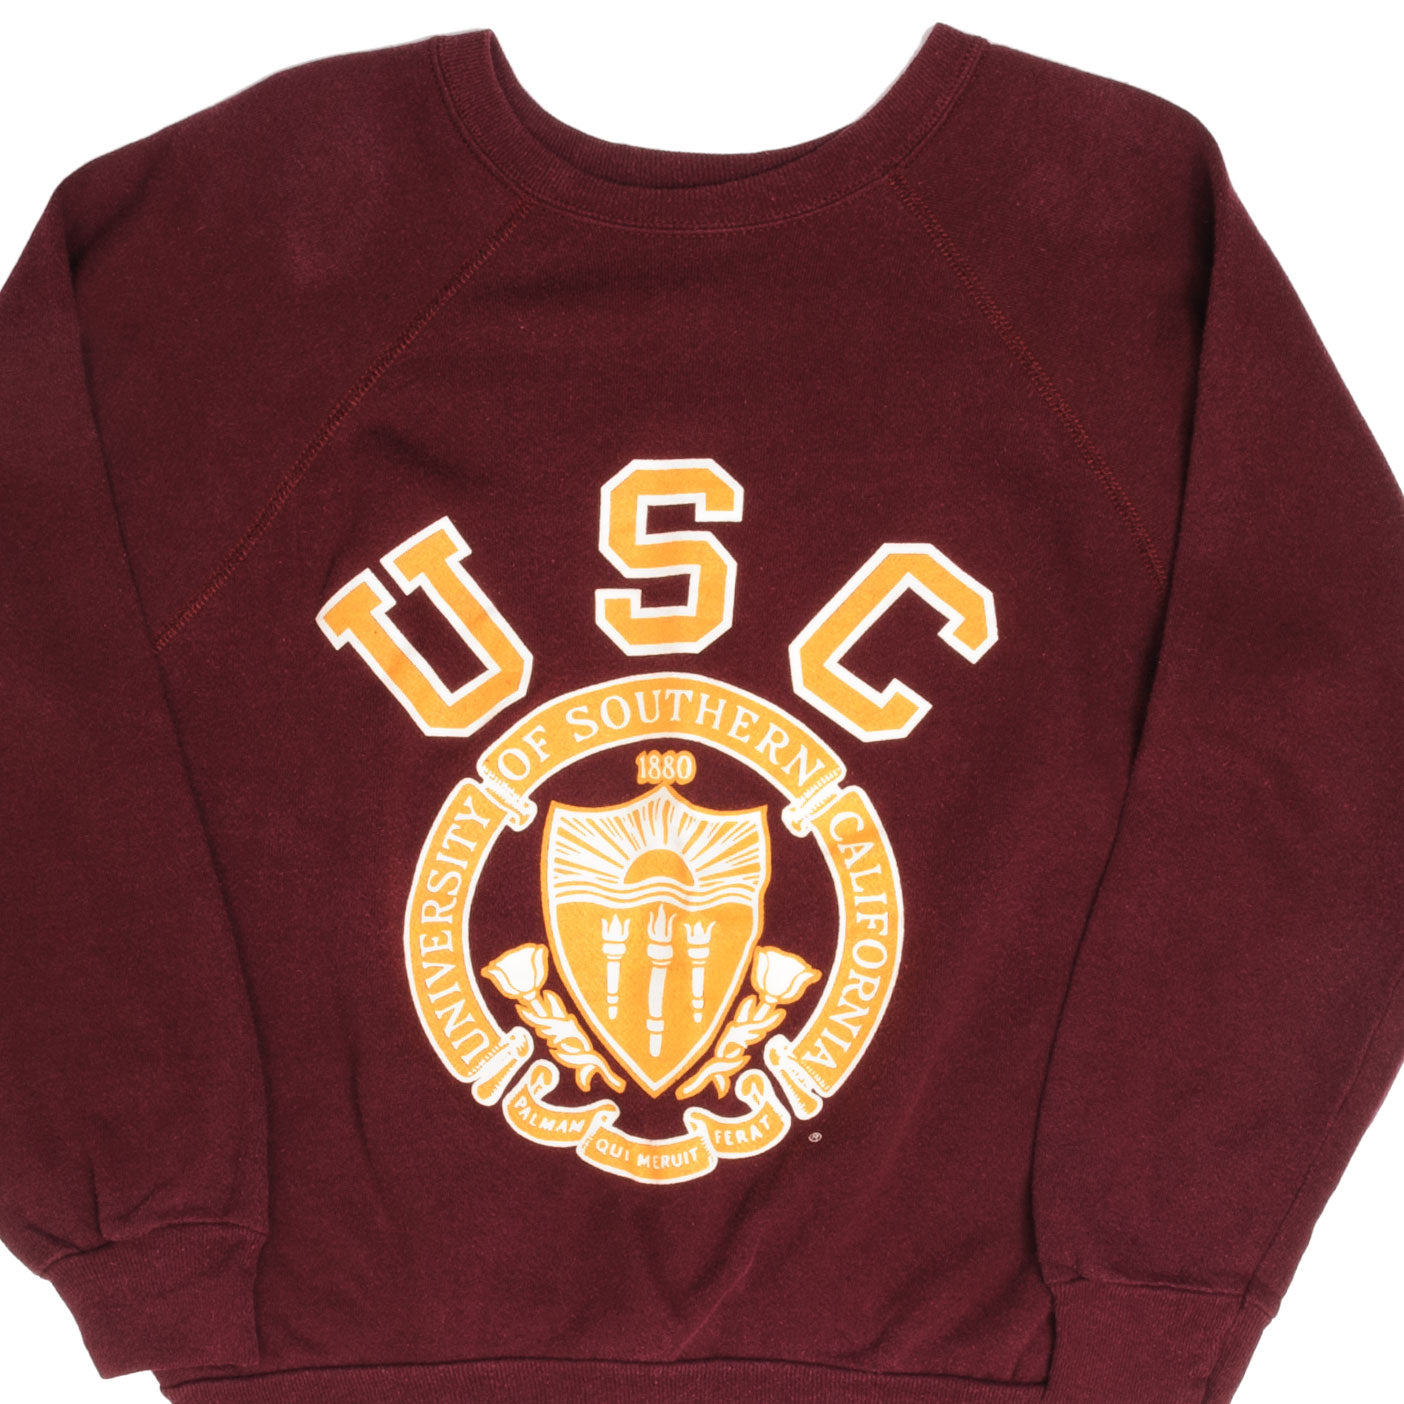 CALIFORNIA UNIVERSITY Hoodie, College Sweatshirt, Vintage Sweater, Purple  Jumper, Unisex, Size L 